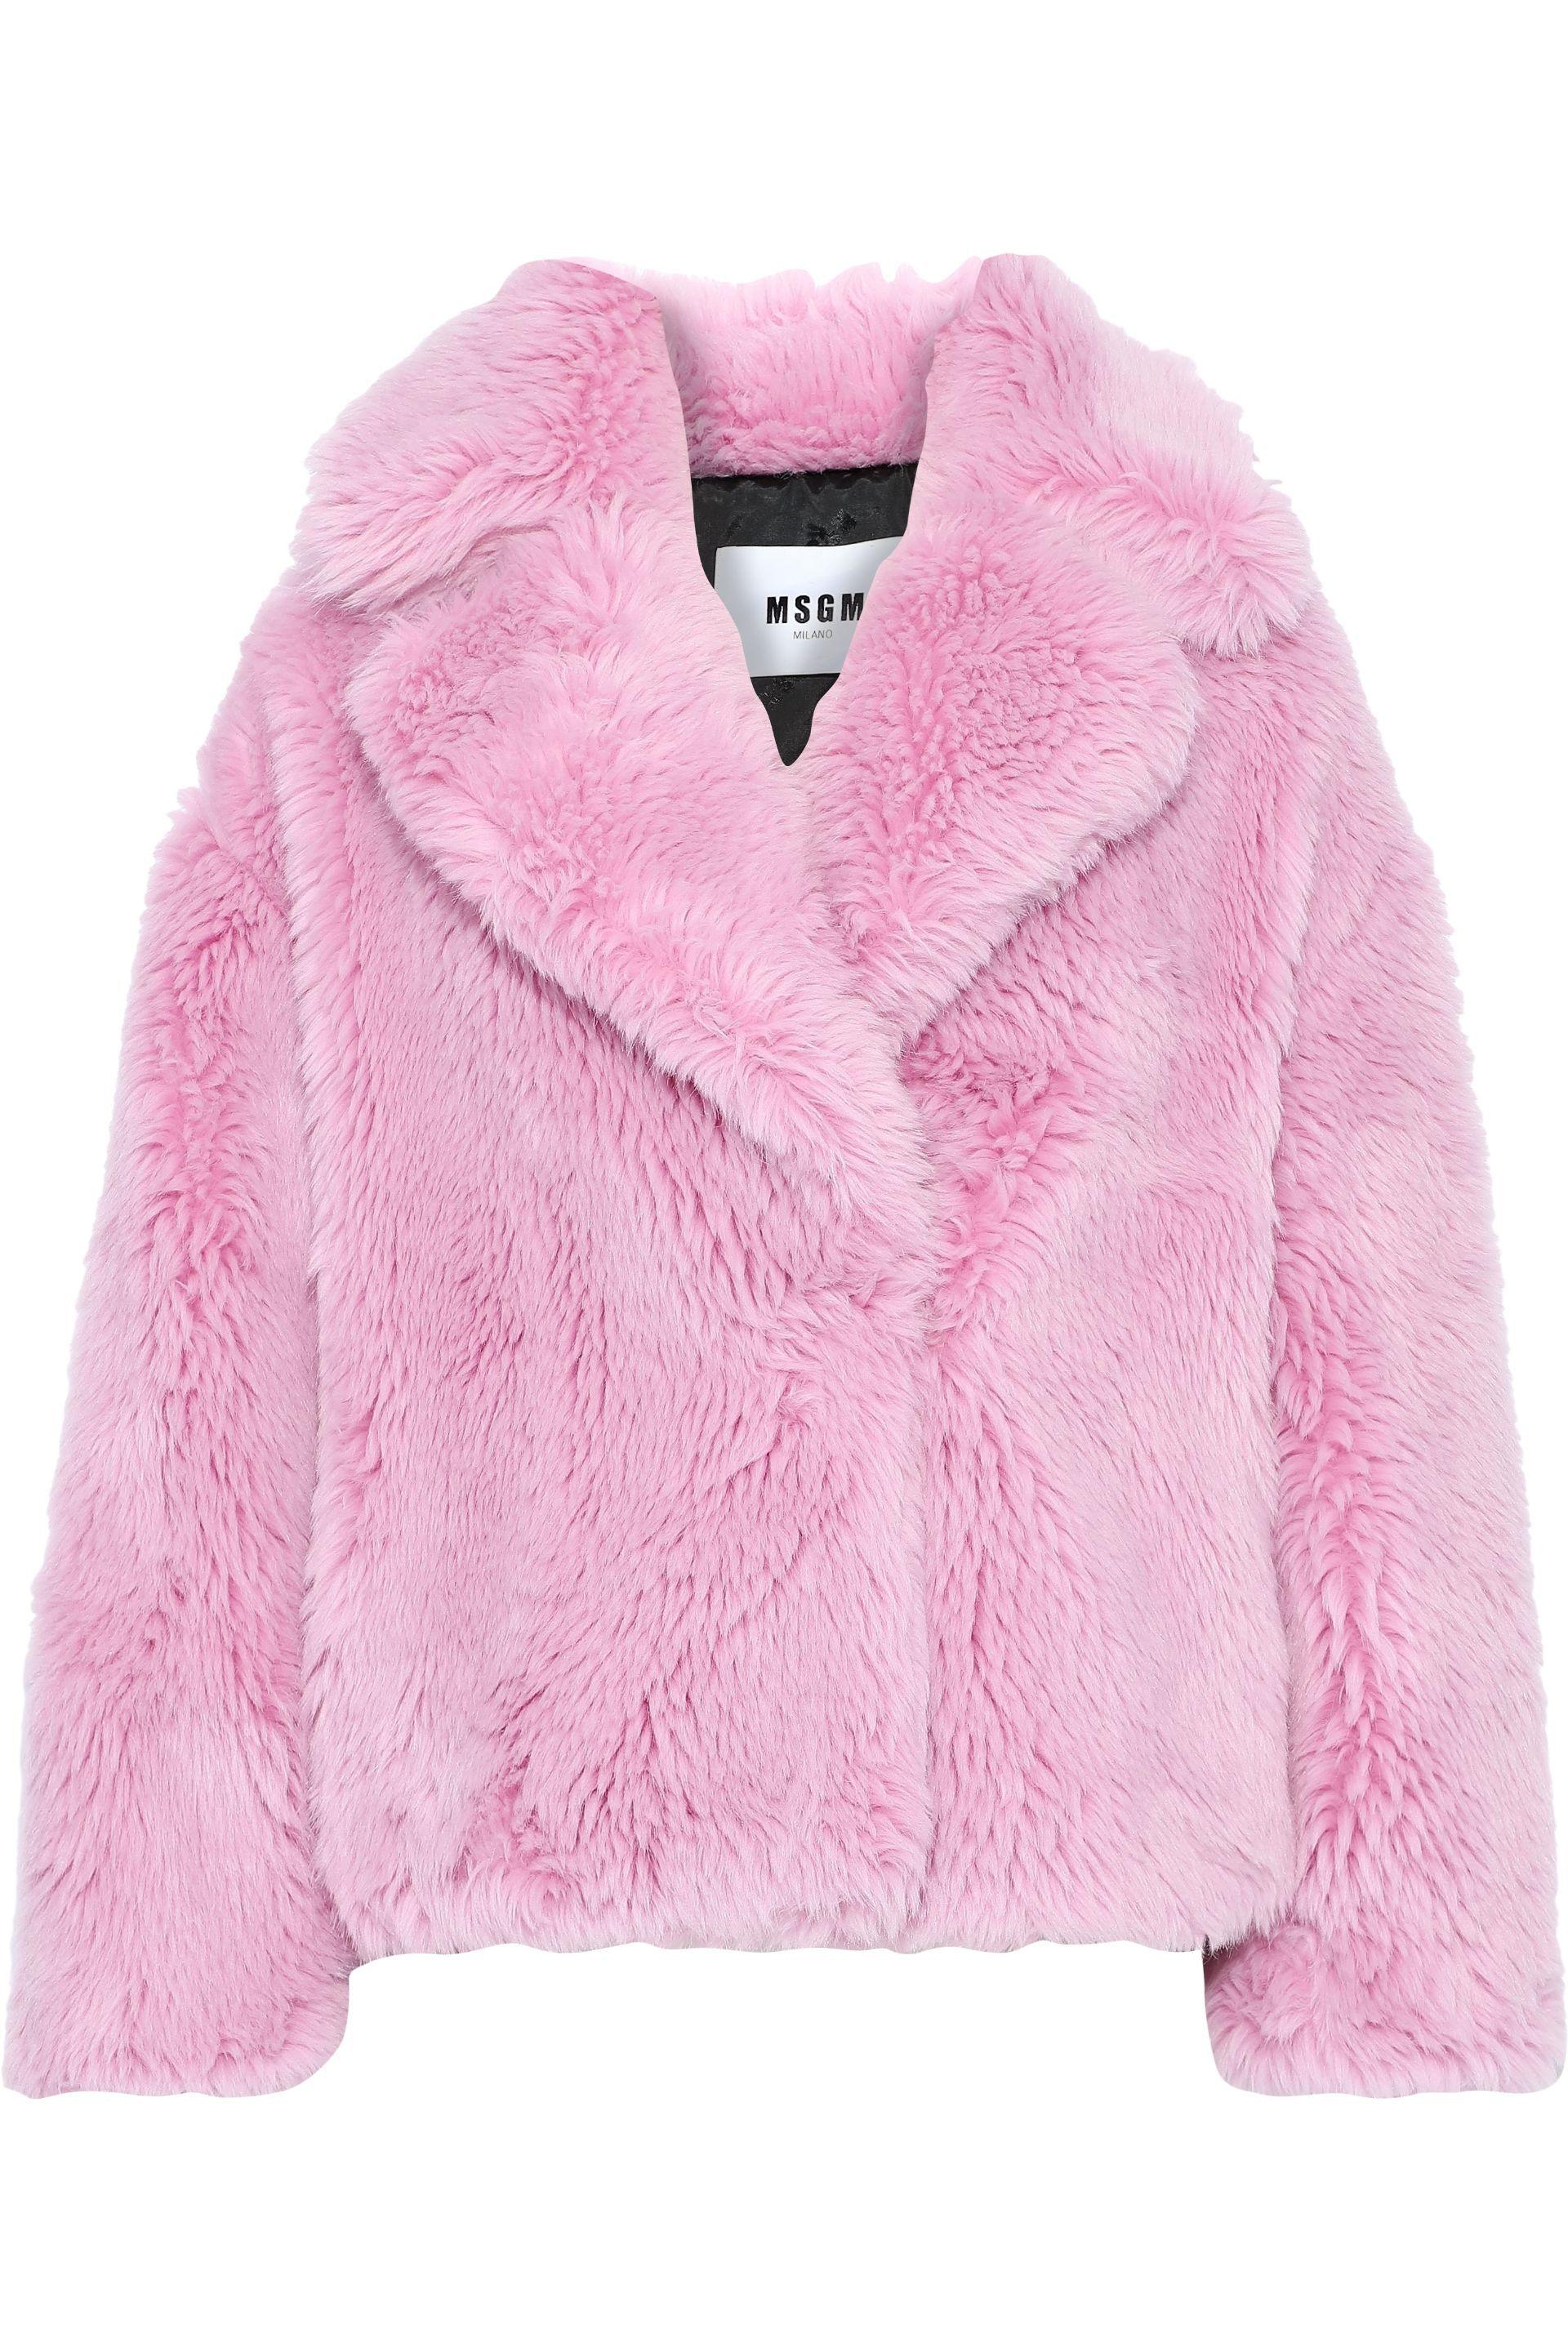 MSGM Faux Fur Coat Bubblegum in Pink - Lyst